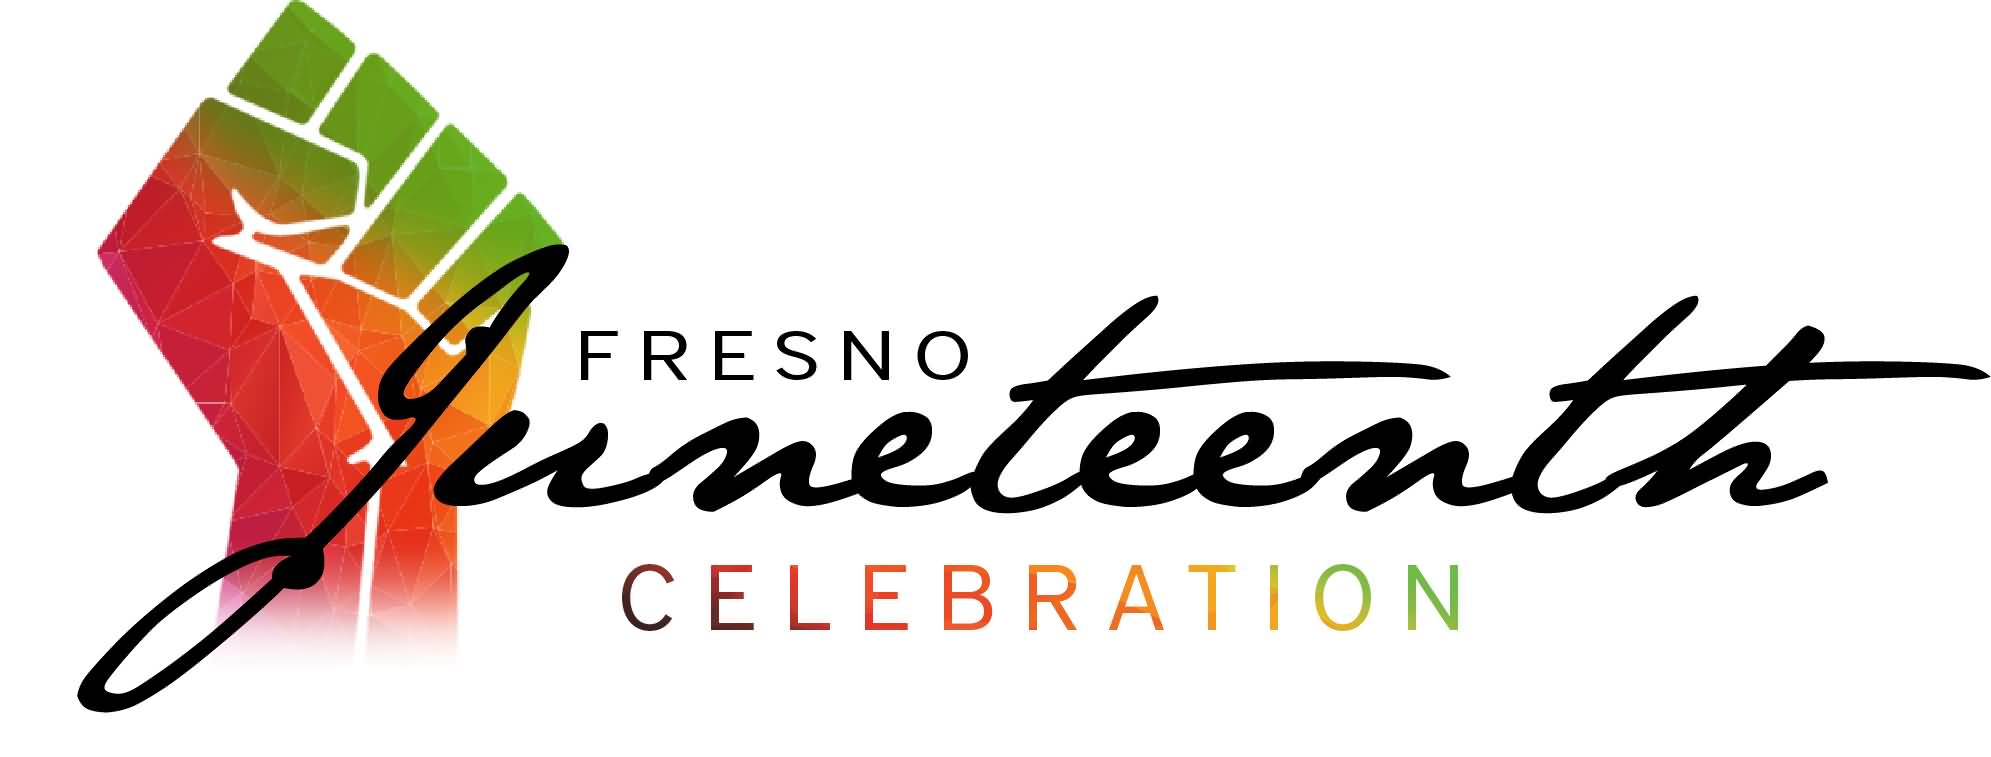 Fresno June Teenth Celebration Graphic